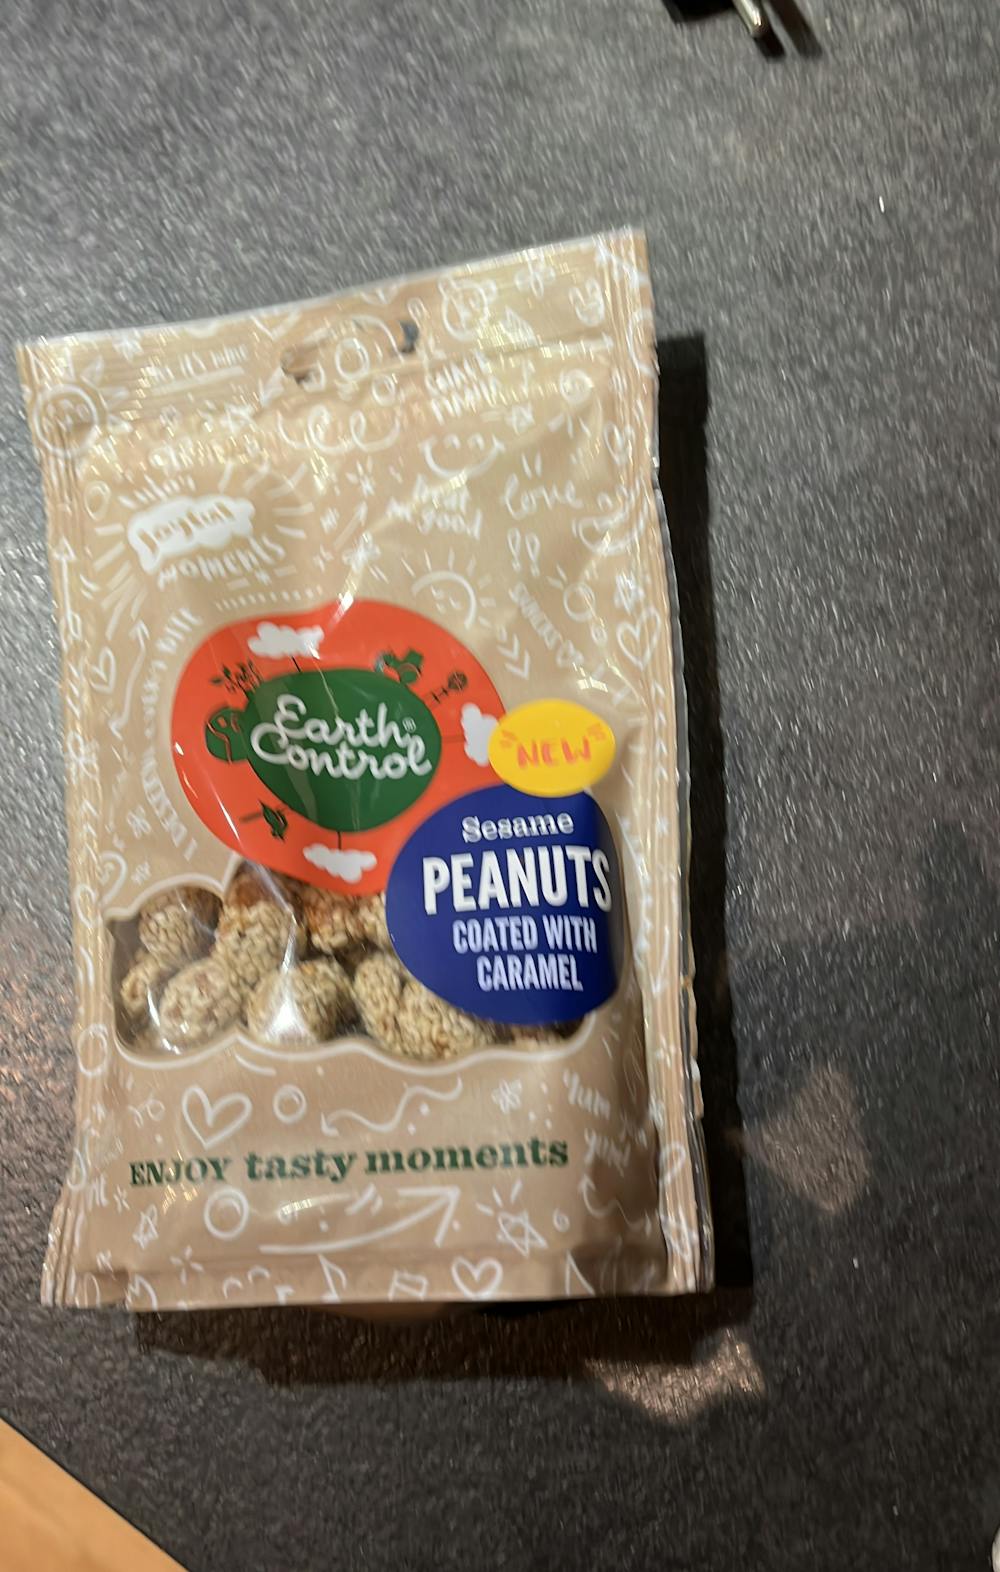 Sesame peanuts coated with caramel , Earth control